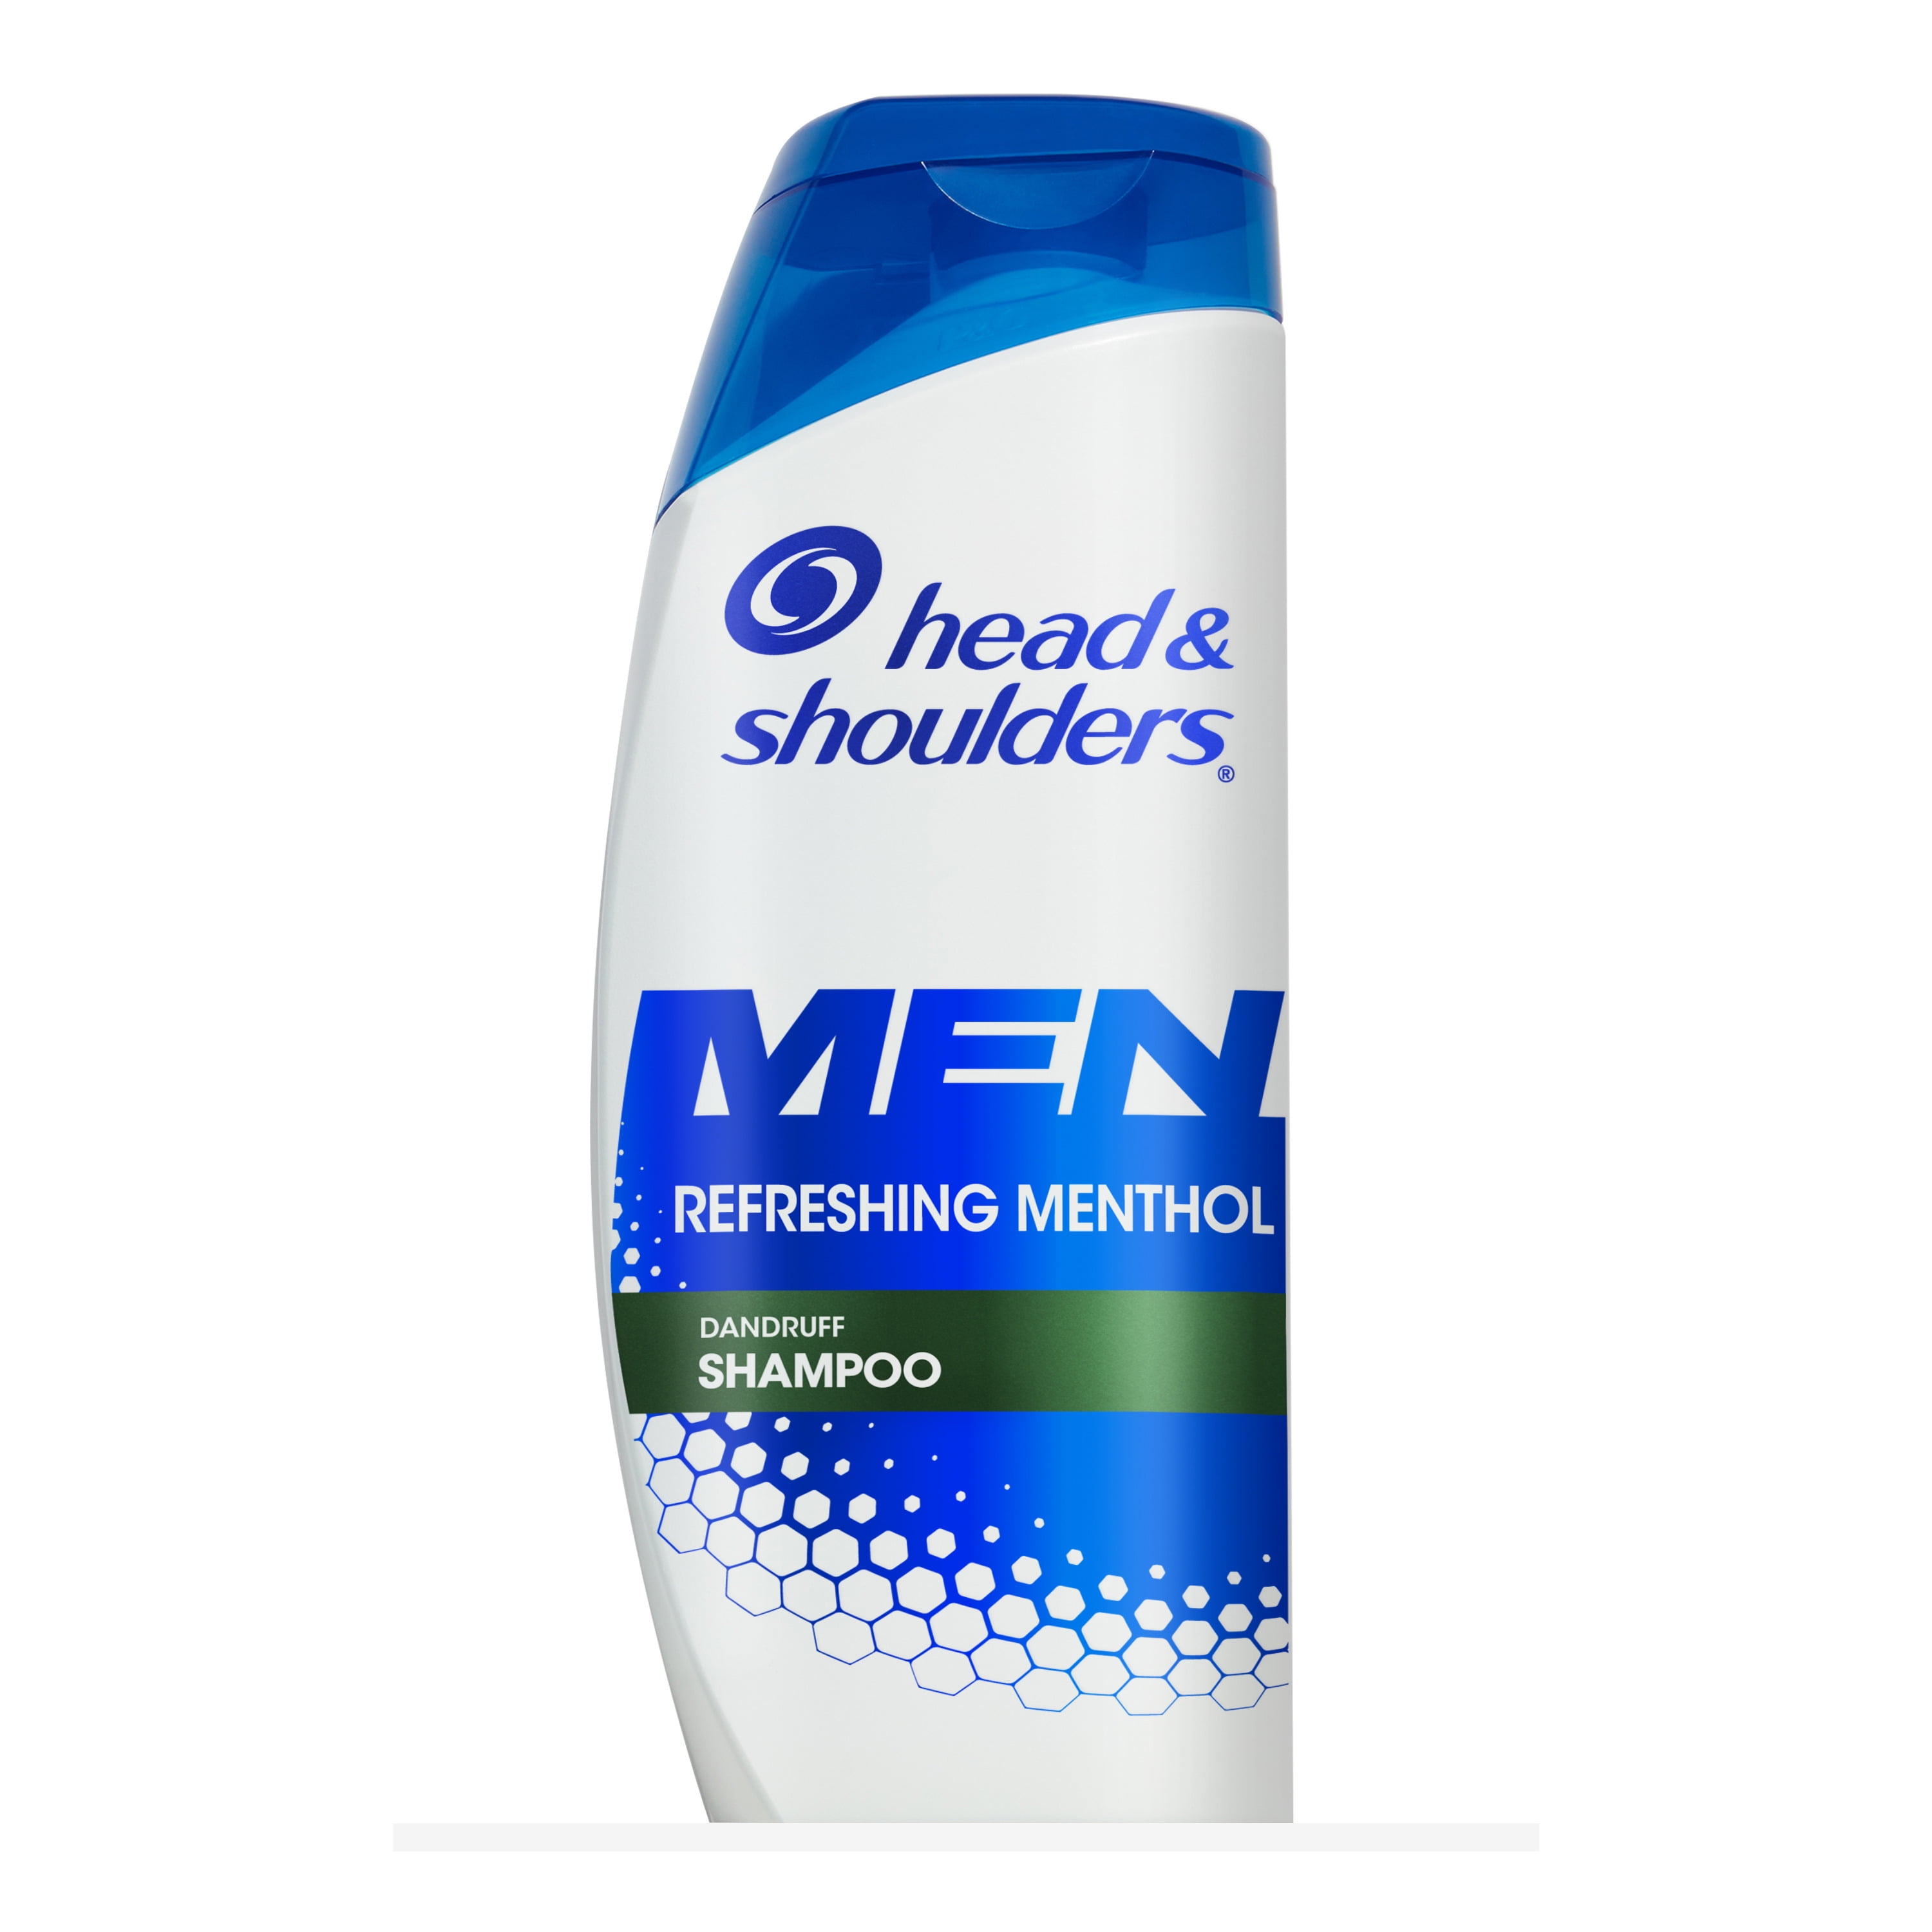 Buy Head & Shoulders Dandruff Shampoo, Refreshing Menthol, 21.9 fl oz